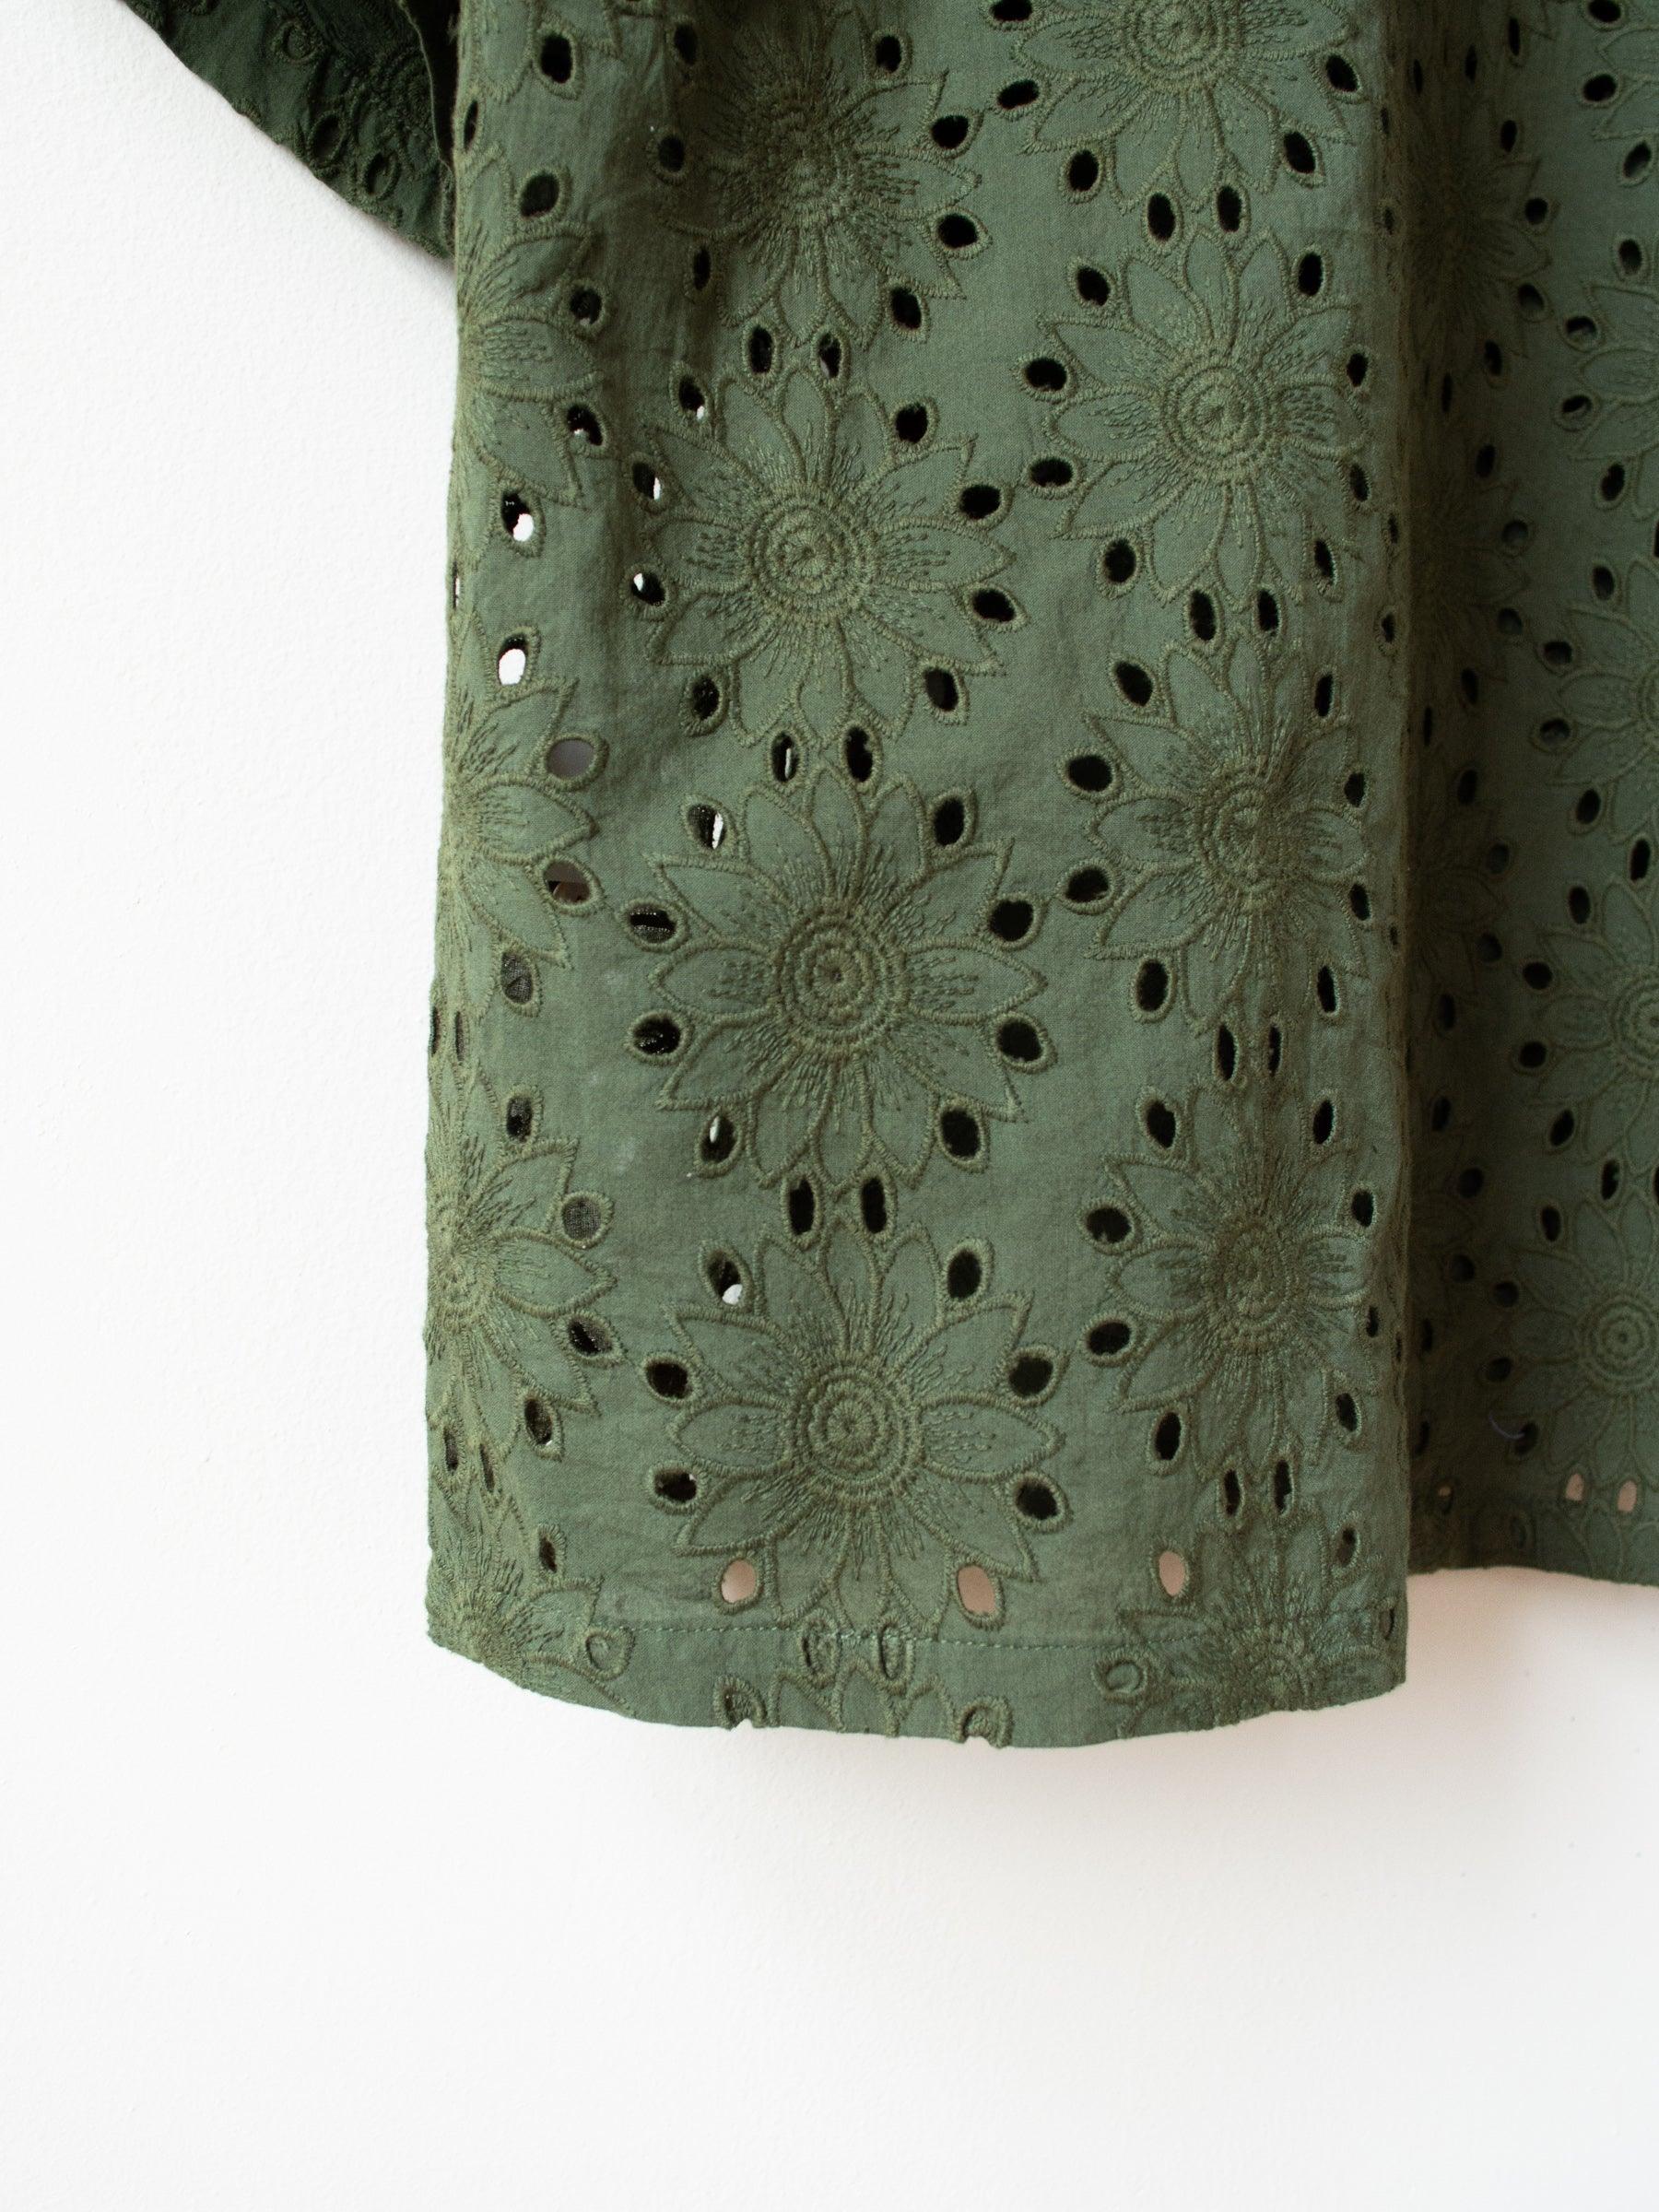 Namu Shop - Niche Flower Lace S/S Open Collar Shirt - Green